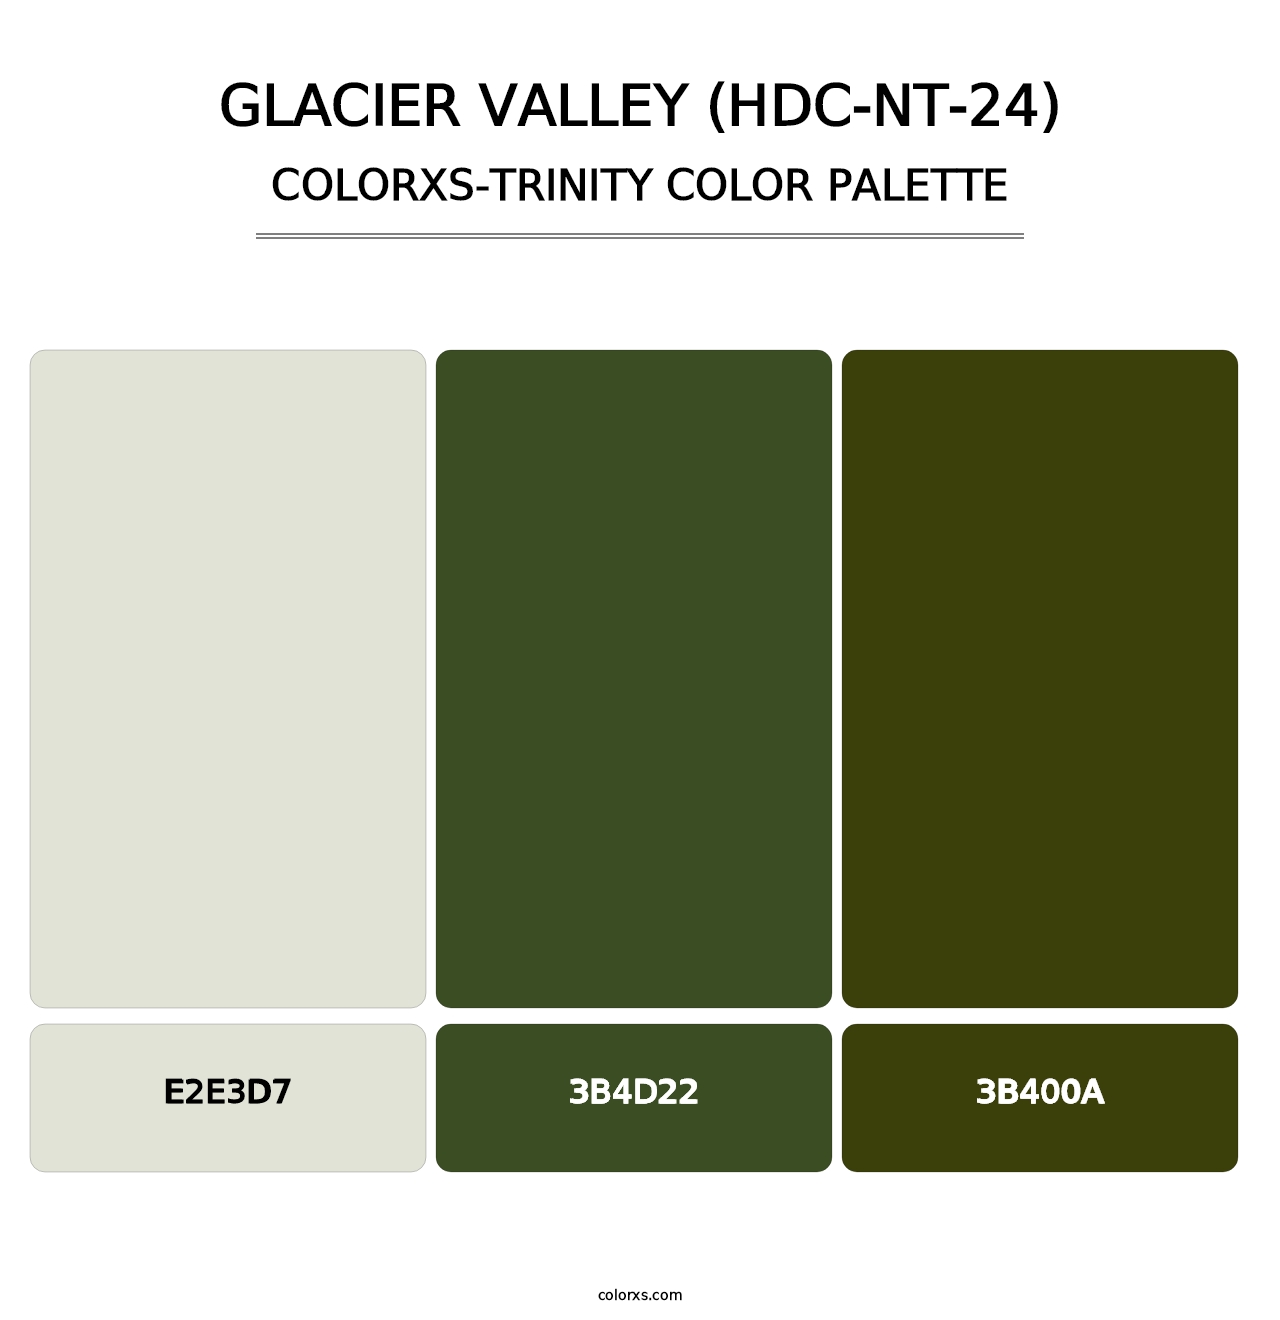 Glacier Valley (HDC-NT-24) - Colorxs Trinity Palette